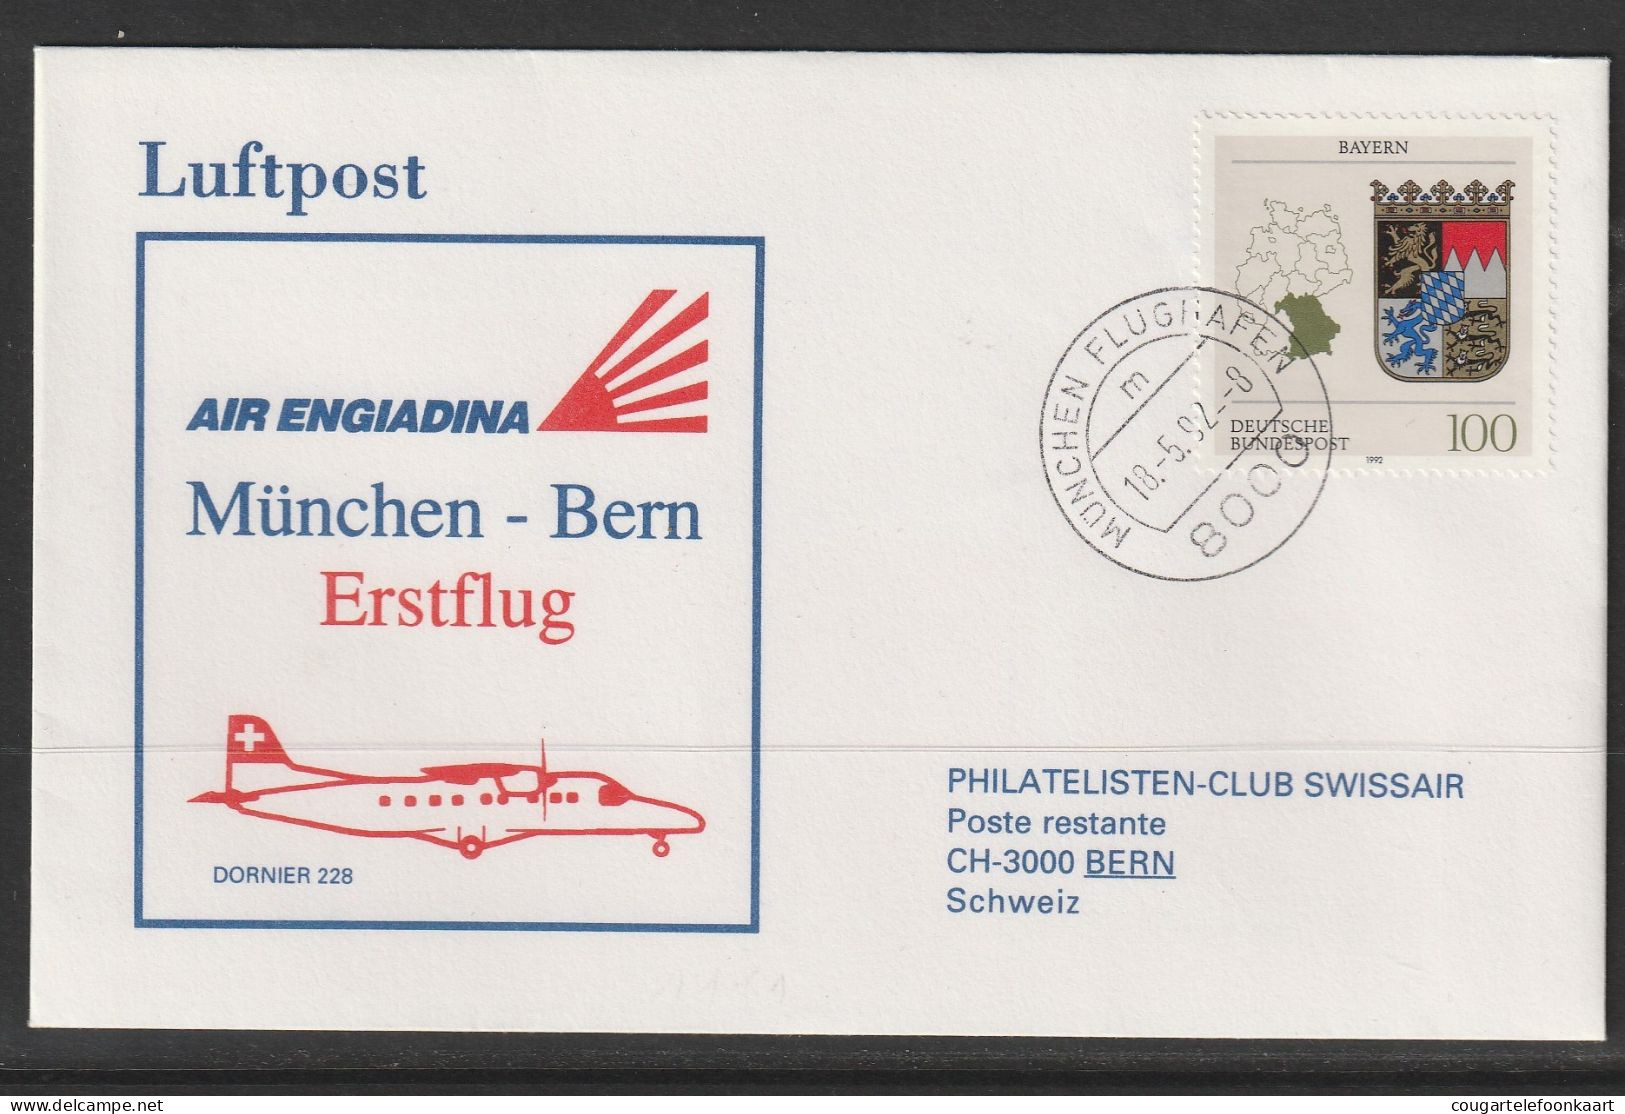 1992, Air Engiadina, Erstflug, München - Bern - First Flight Covers